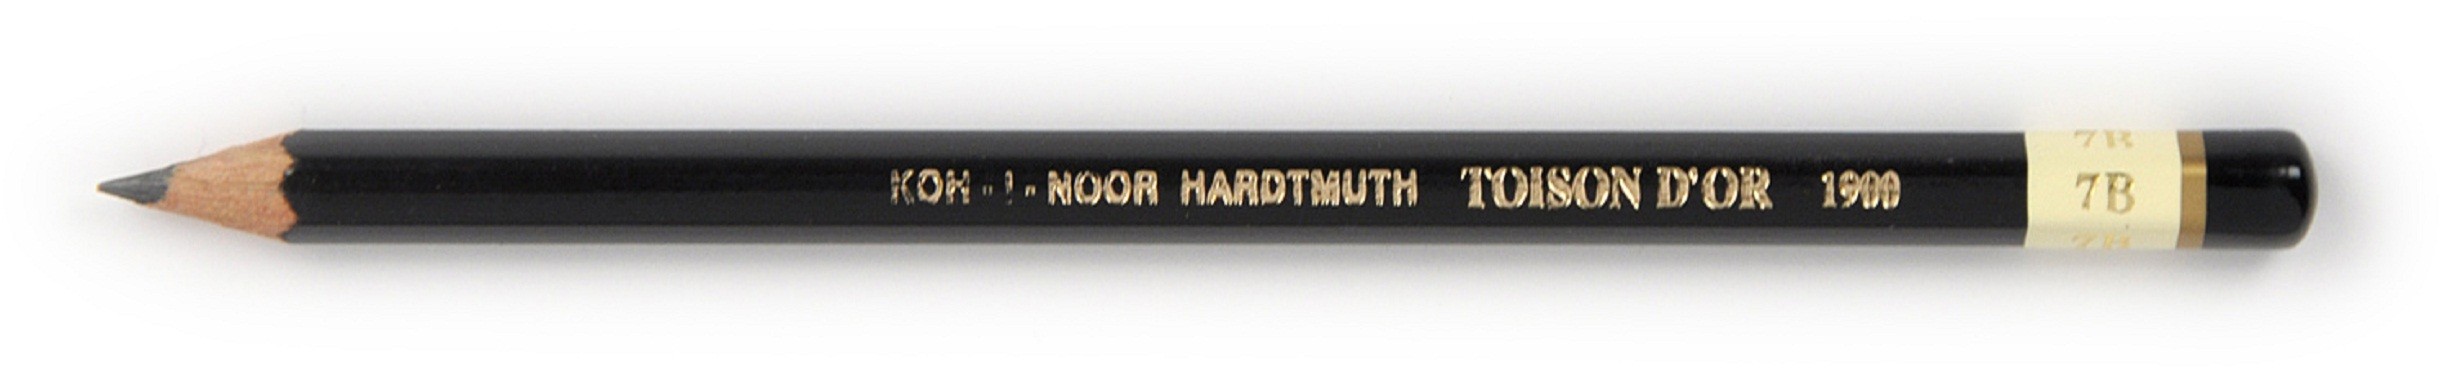 Creion tehnic Toison D'or Art KOH-I-NOOR, duritate 7B